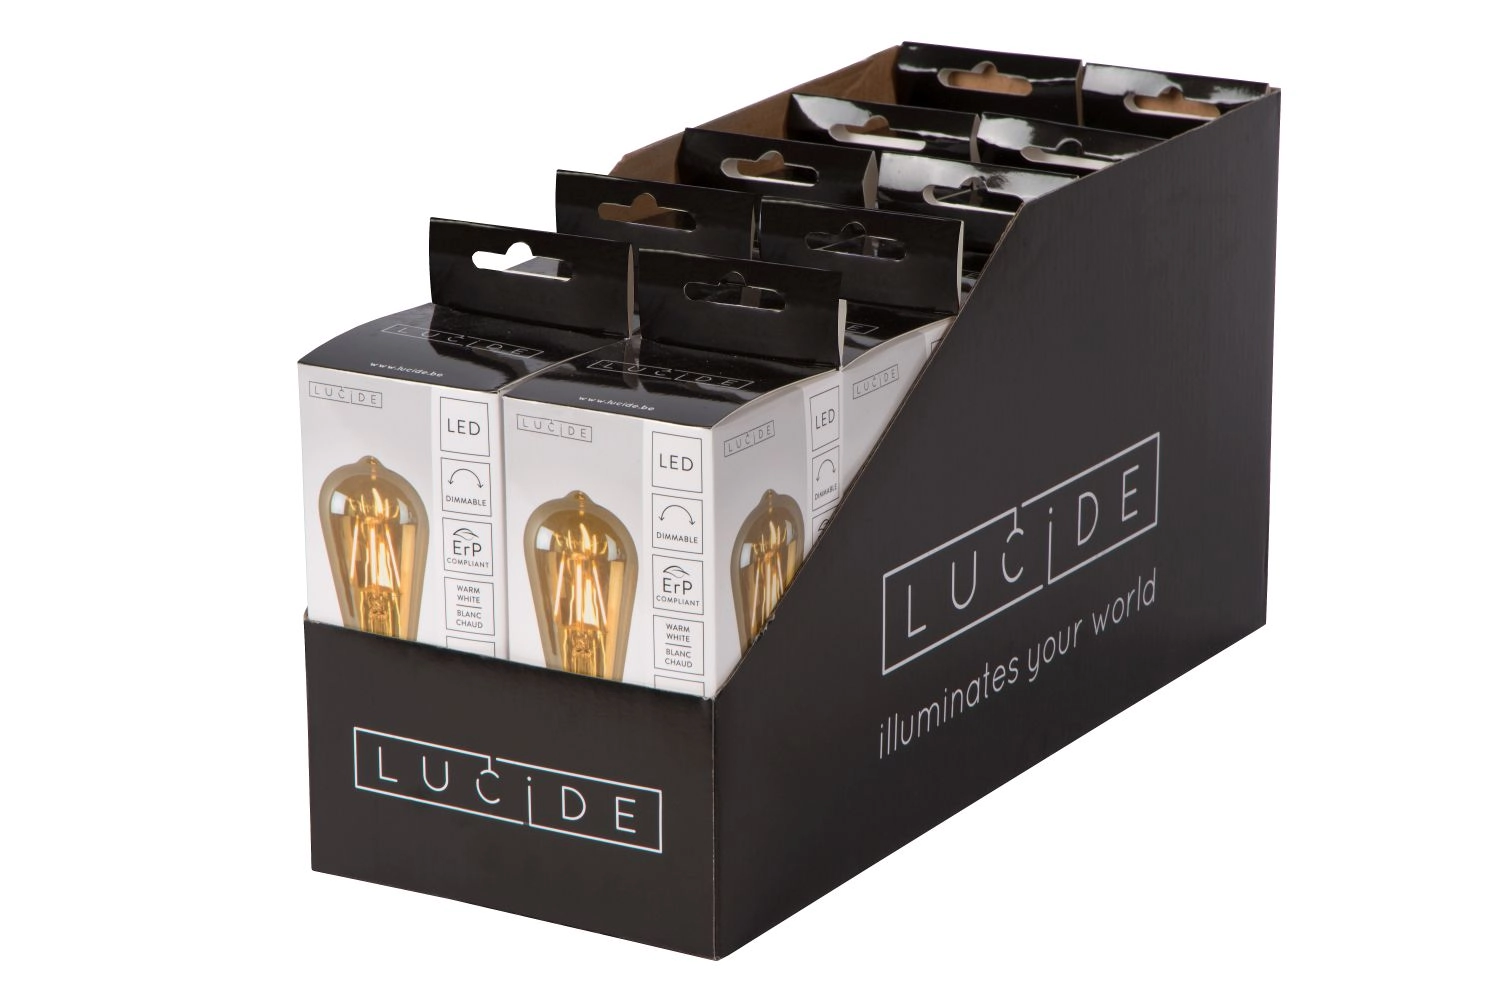 LU 49068/05/62 Lucide ST64 - Filament bulb - Ø 6,4 cm - LED Dim. - E27 - 1x5W 2700K - Amber